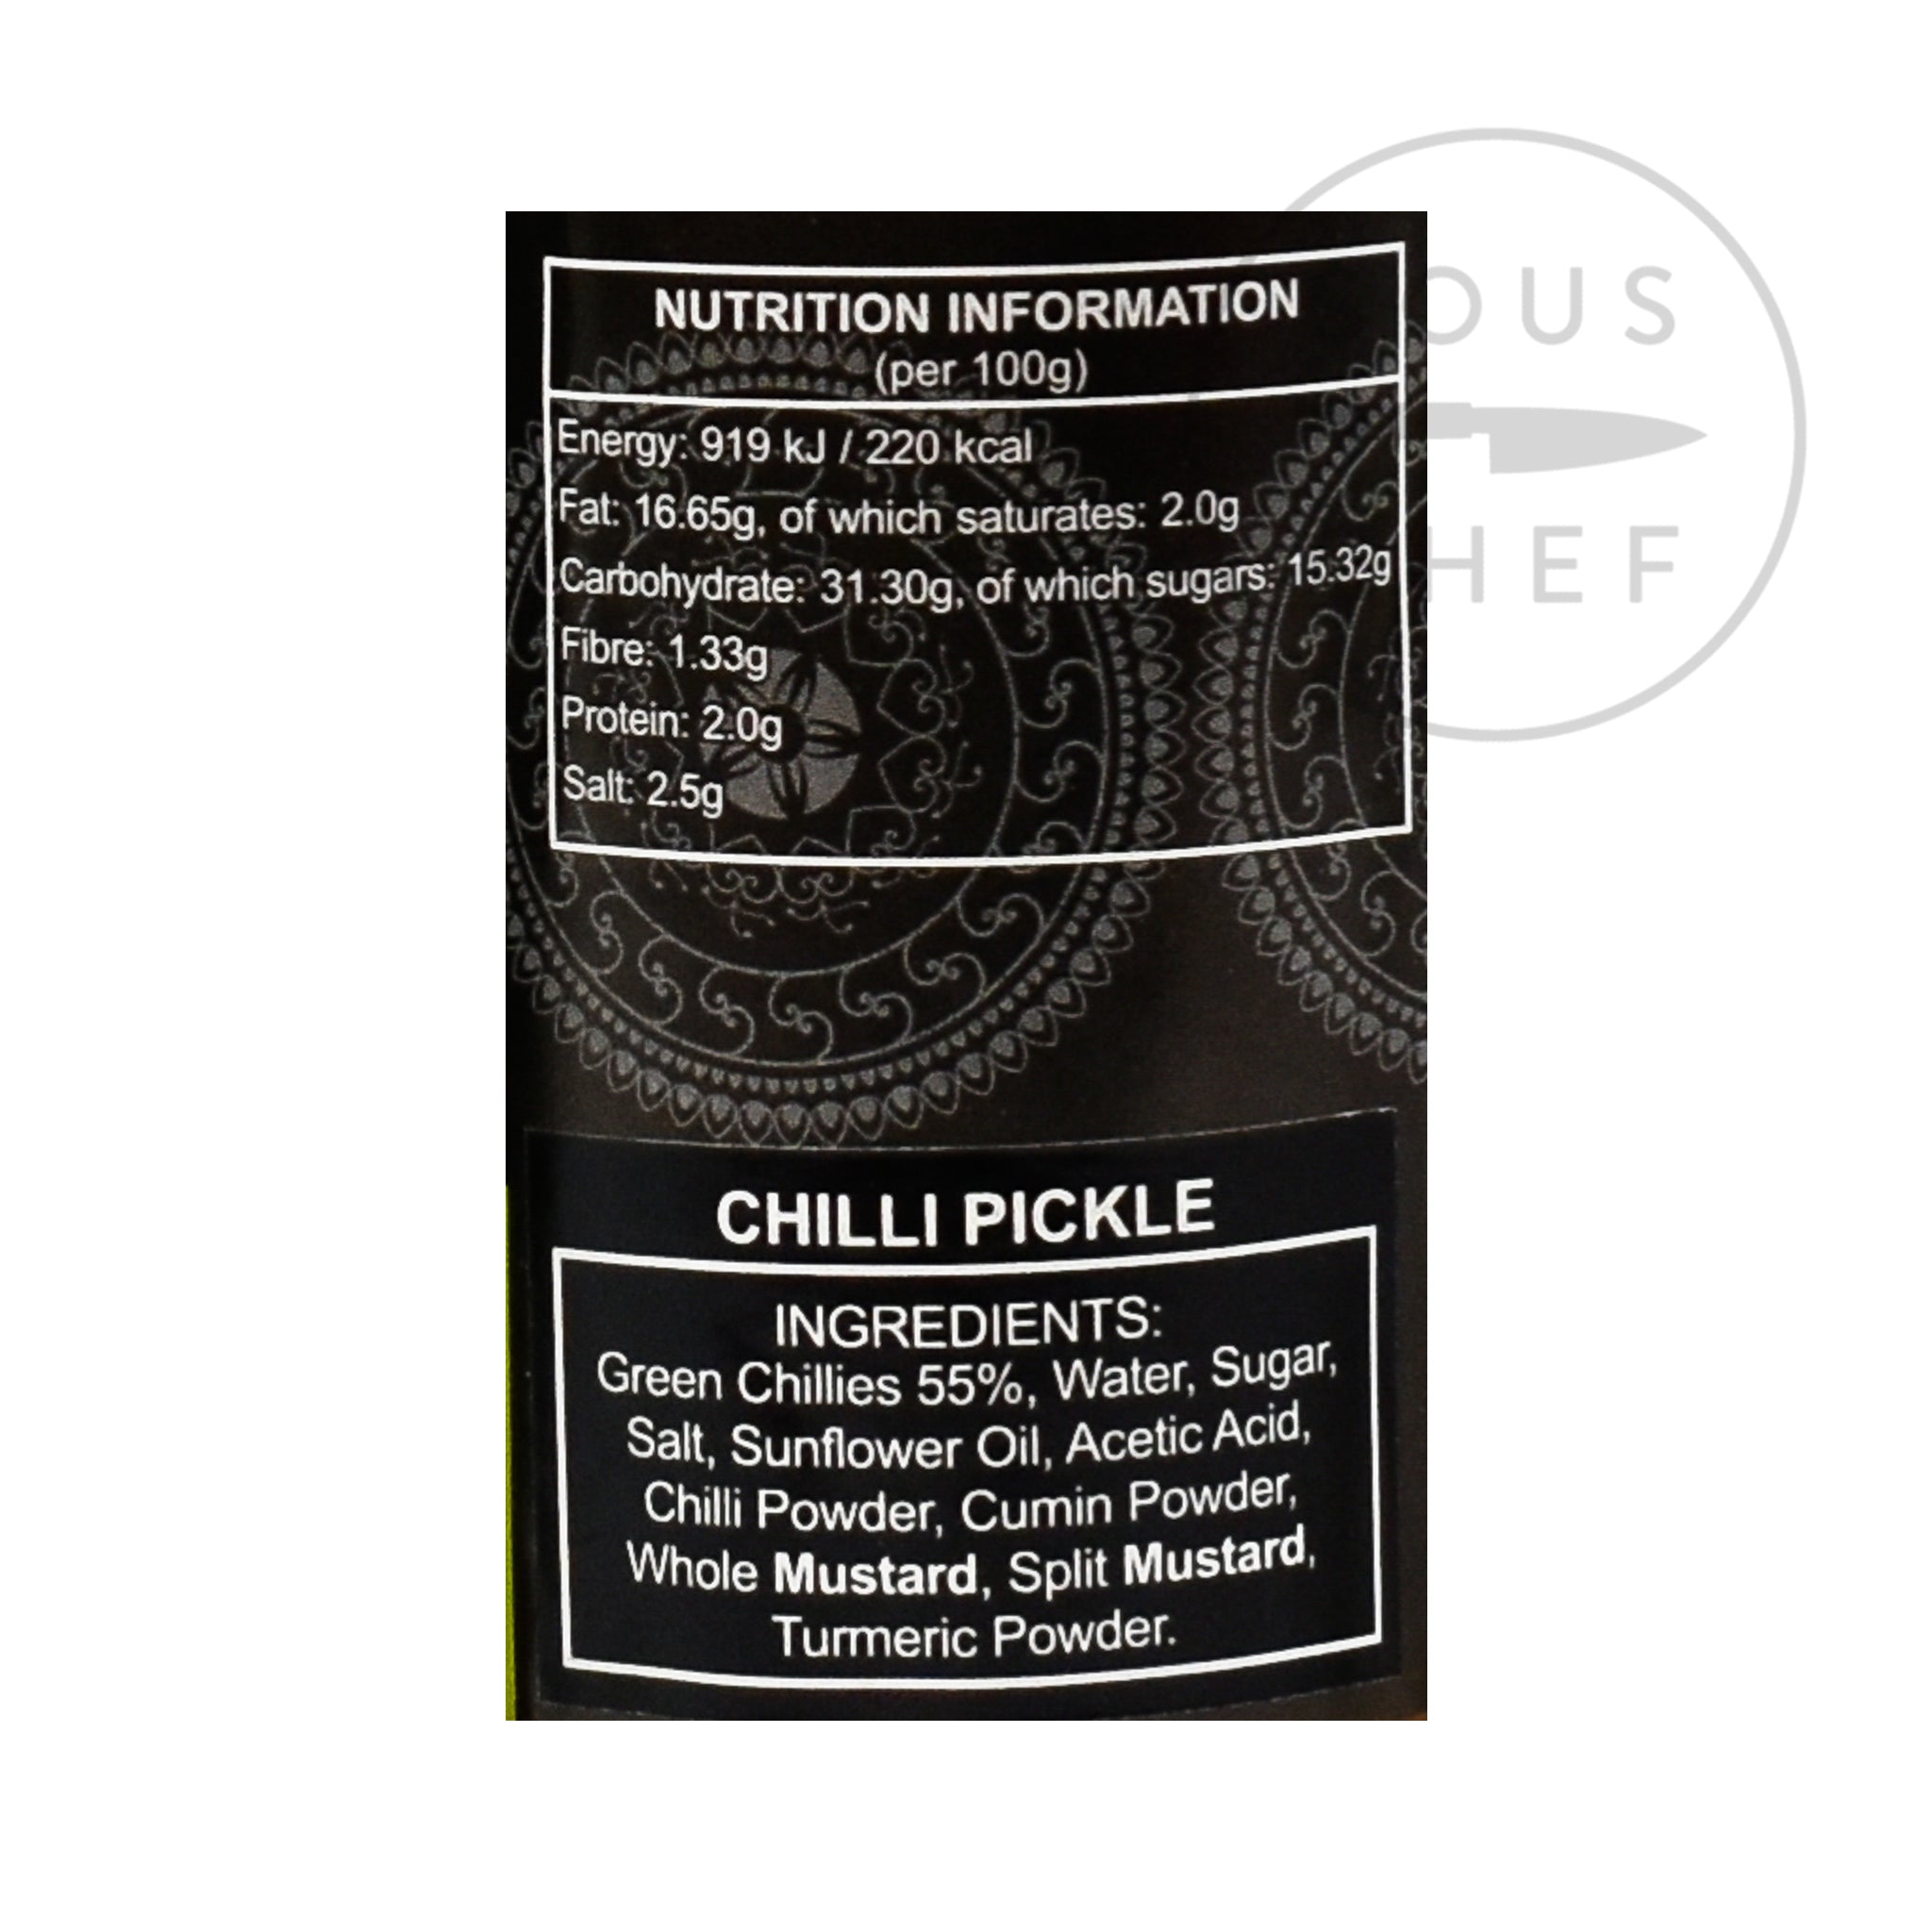 Ferns' Chilli Pickle 380g nutritional information ingredients